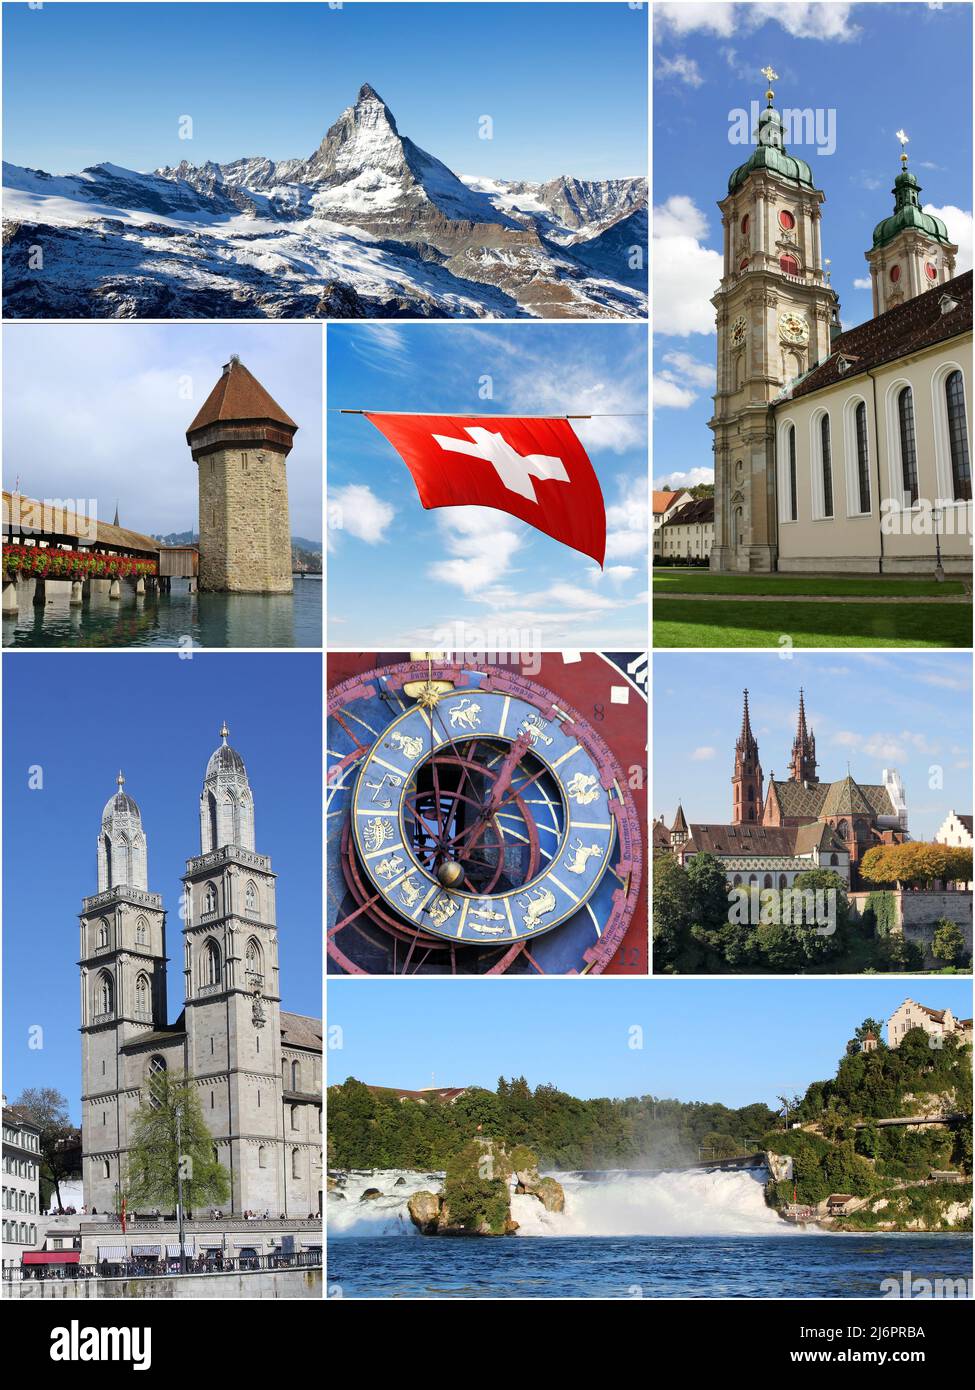 Switzerland landmark collage with tourist highlights Stock Photo